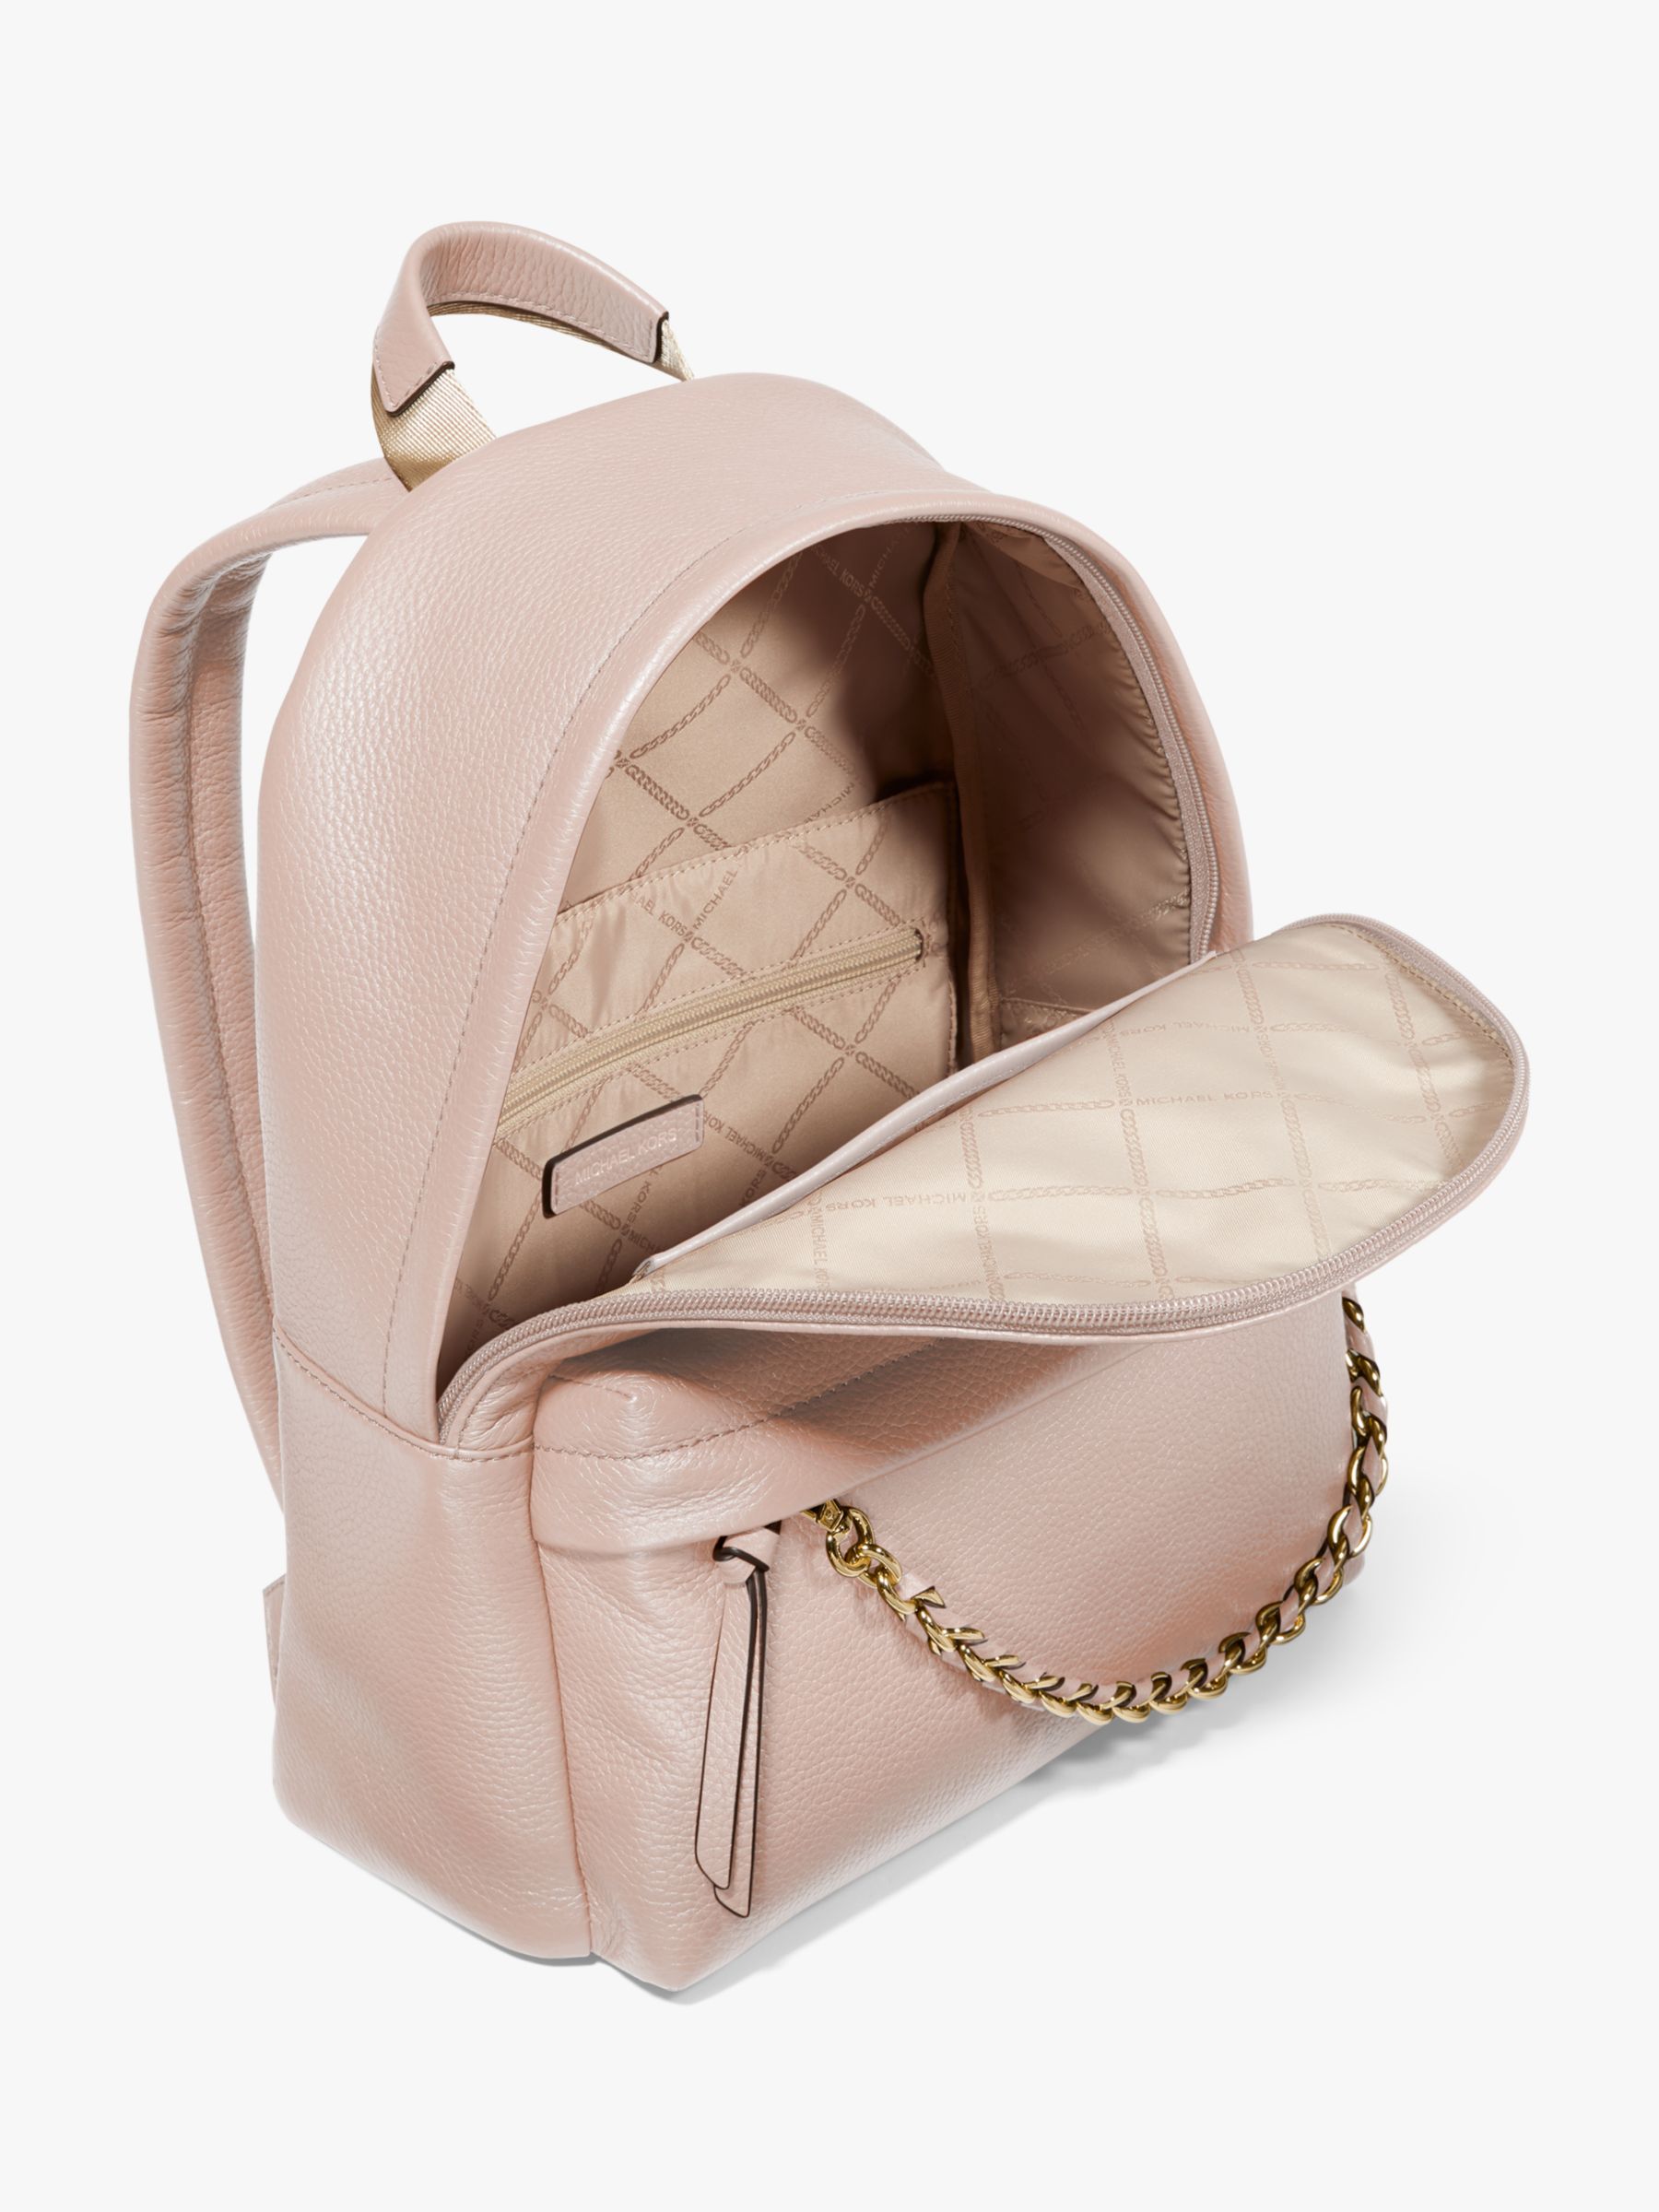 michael kors soft pink backpack